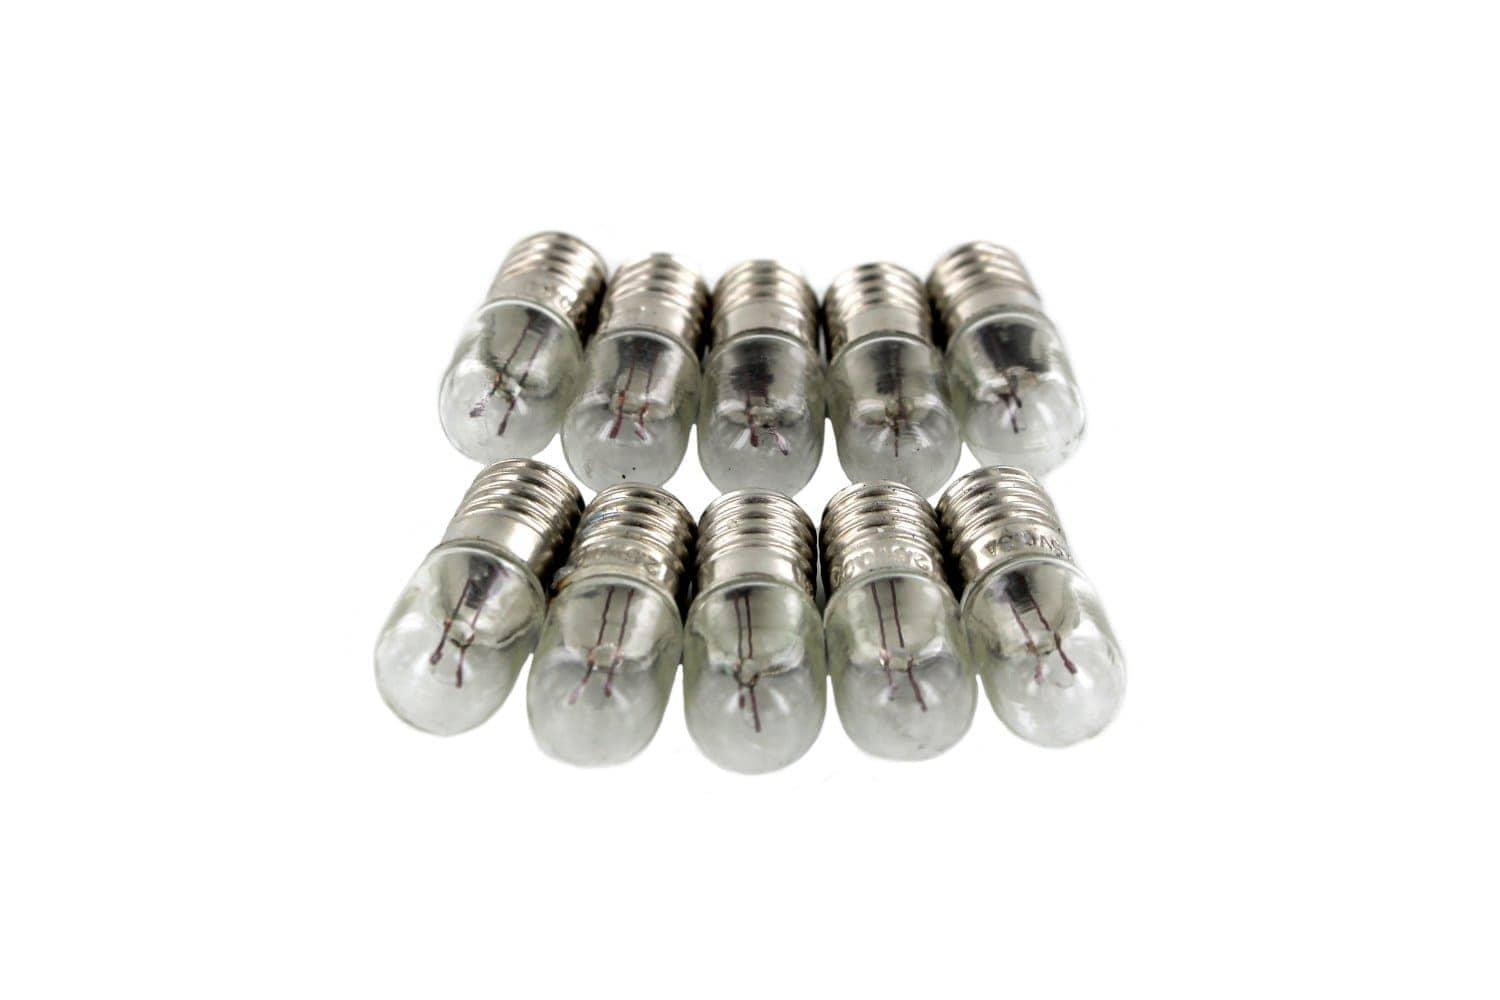 Arbor Scientific 2.5V Miniature Bulbs (Pack of 10)